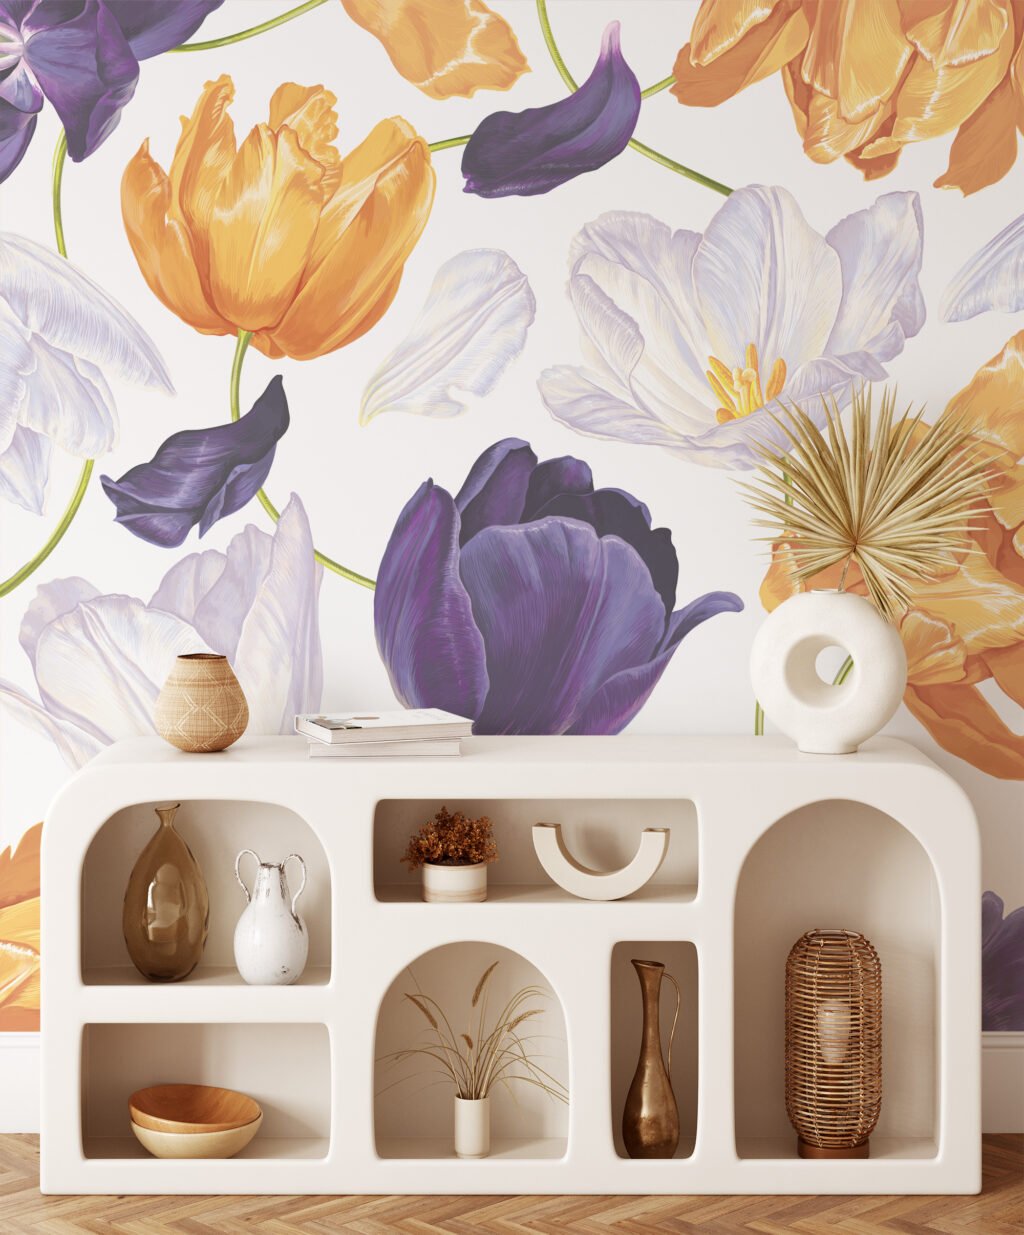 Modern Tasarımlı Yumuşak Dev Papatya Çiçekleri Desenli Duvar Kağıdı Çiçekli Duvar Kağıtları 2